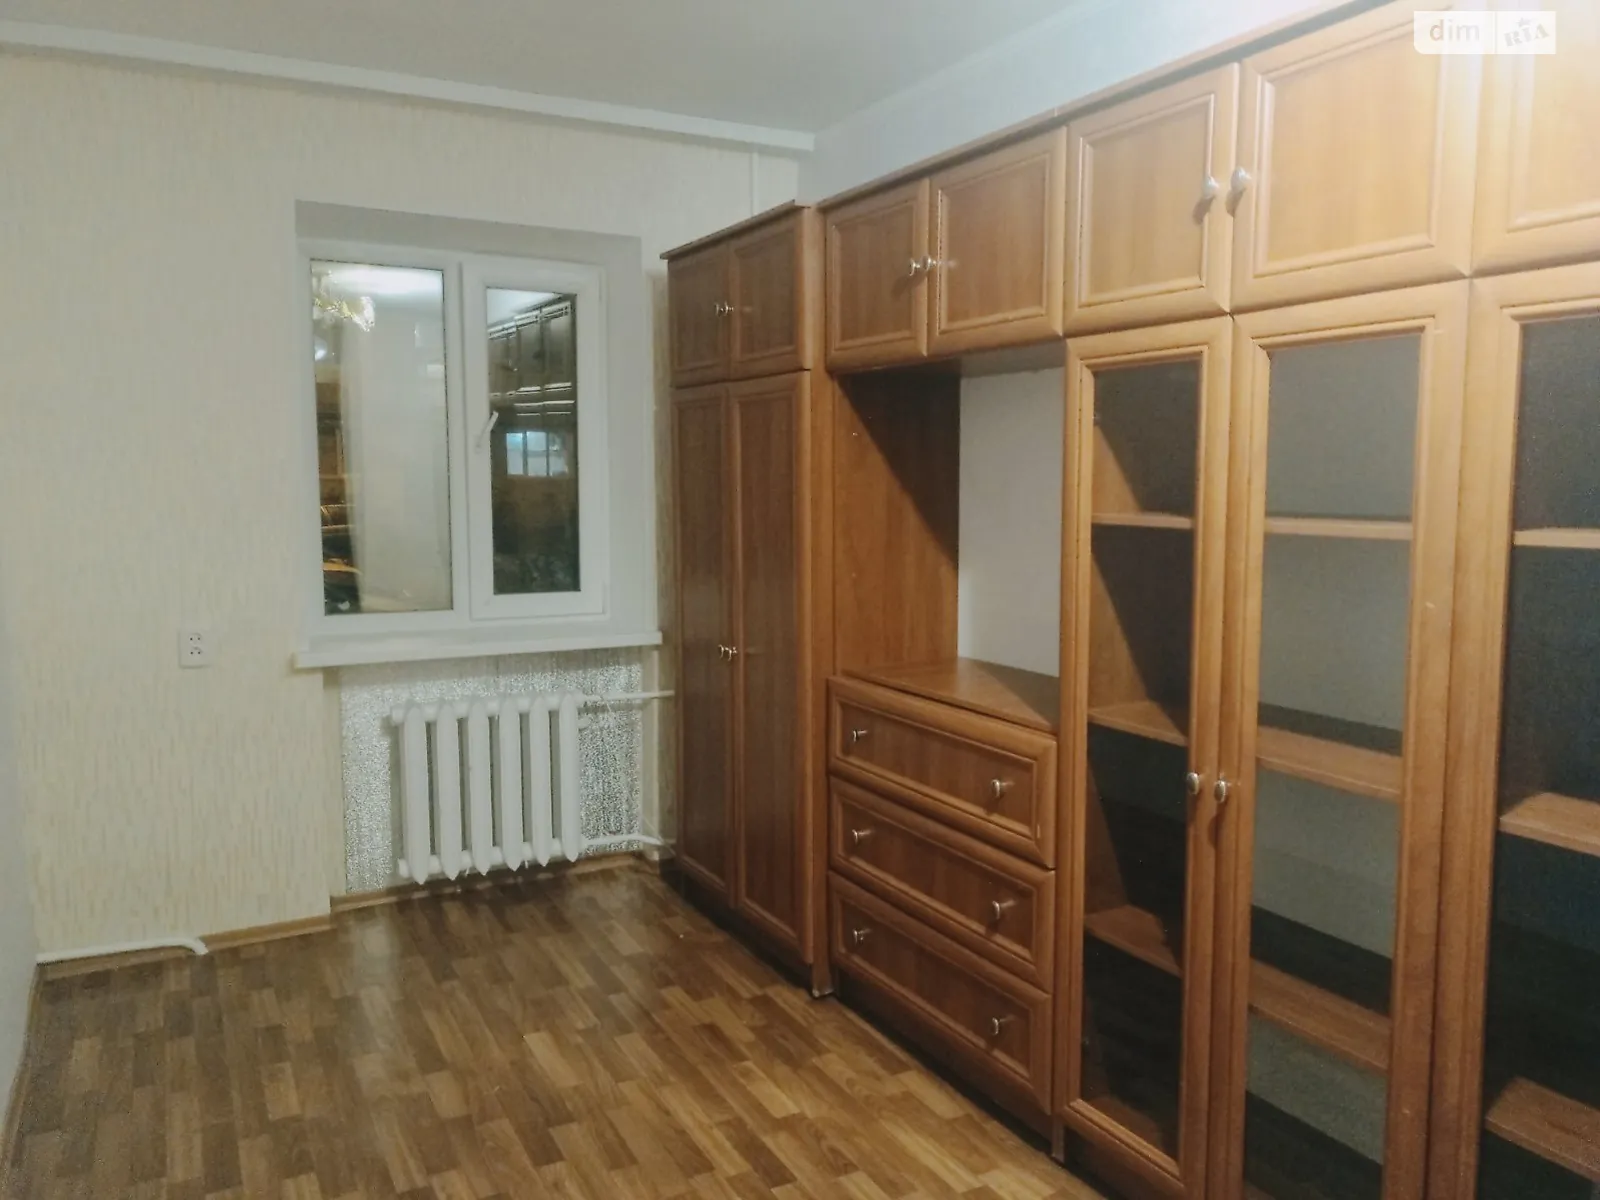 Продается комната 18.2 кв. м в Виннице, цена: 17000 $ - фото 1